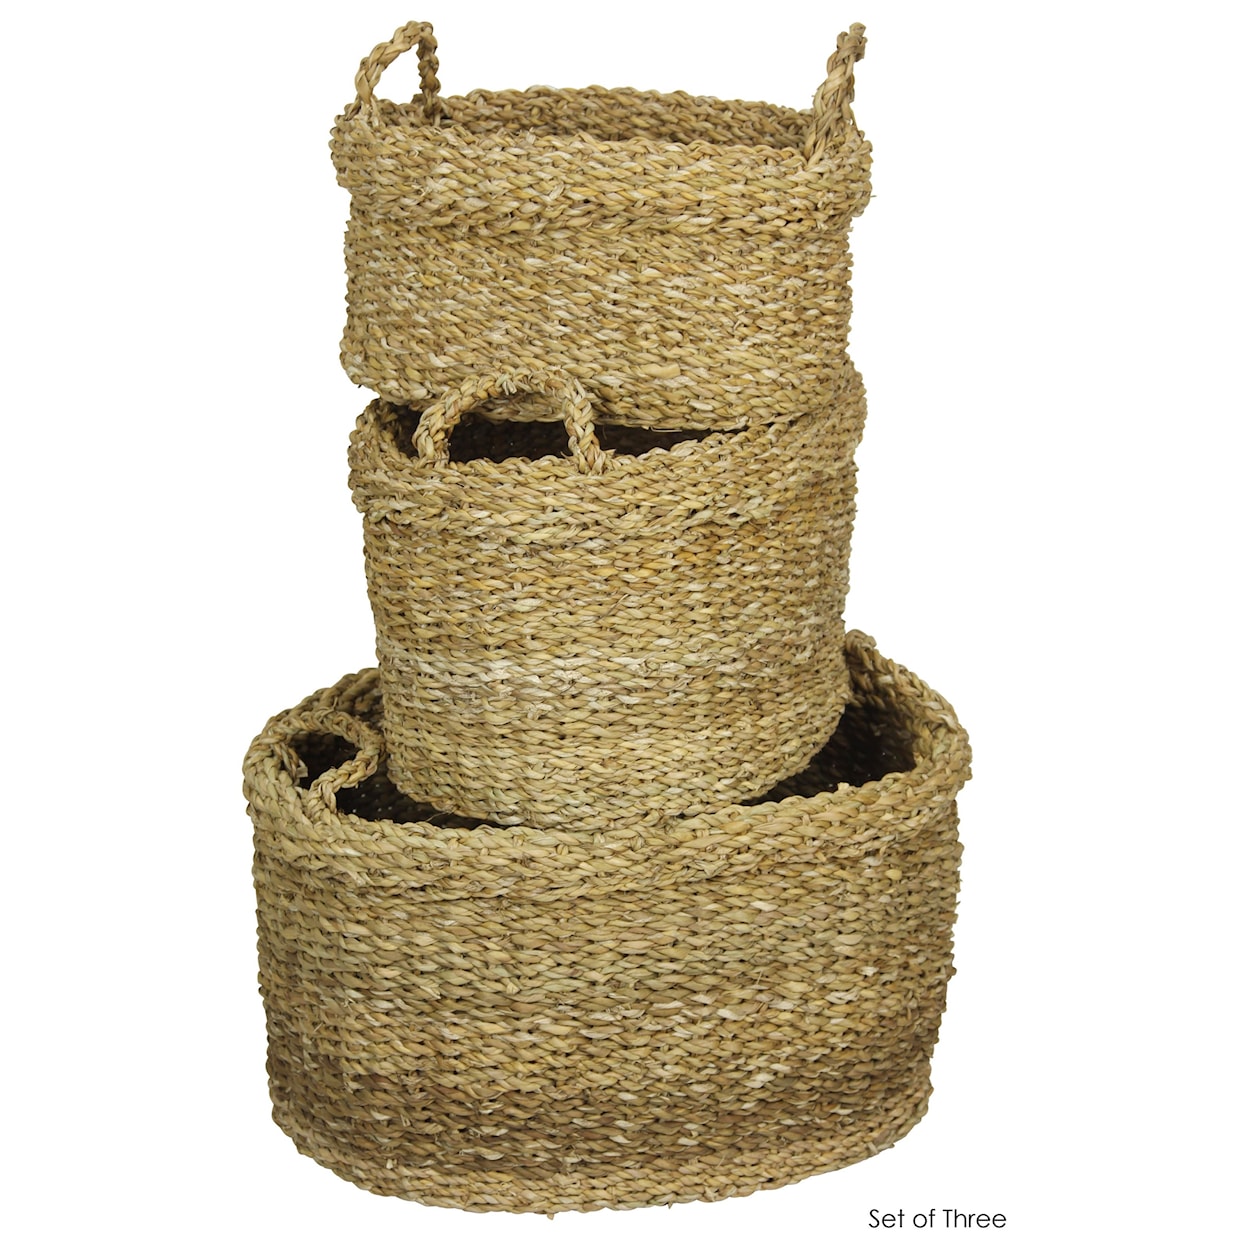 StyleCraft Accessories Set of 3 Hand Woven Nesting Baskets